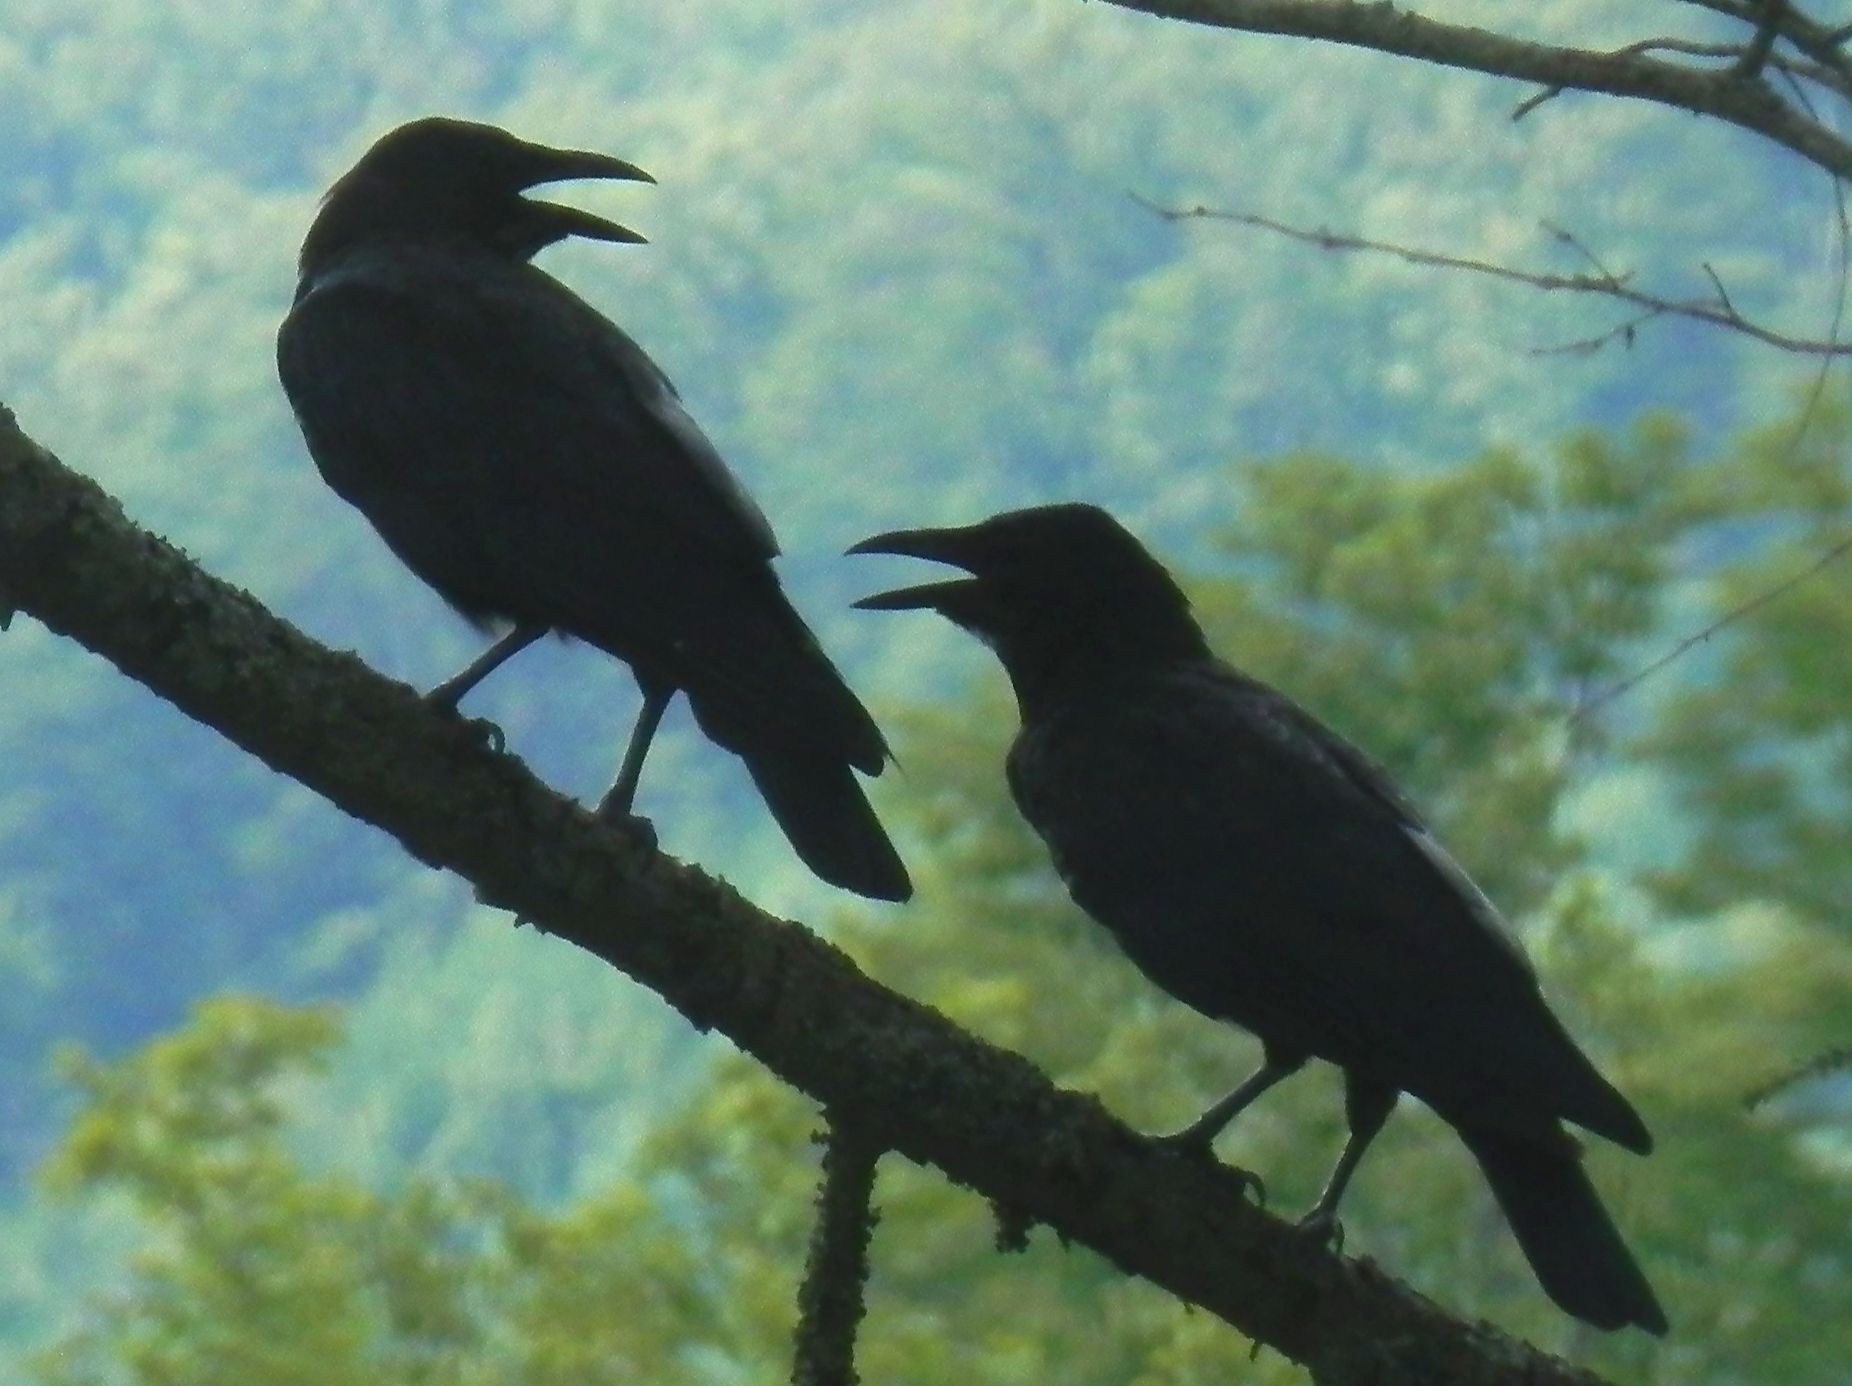 11. Crows enjoy pranking their friends